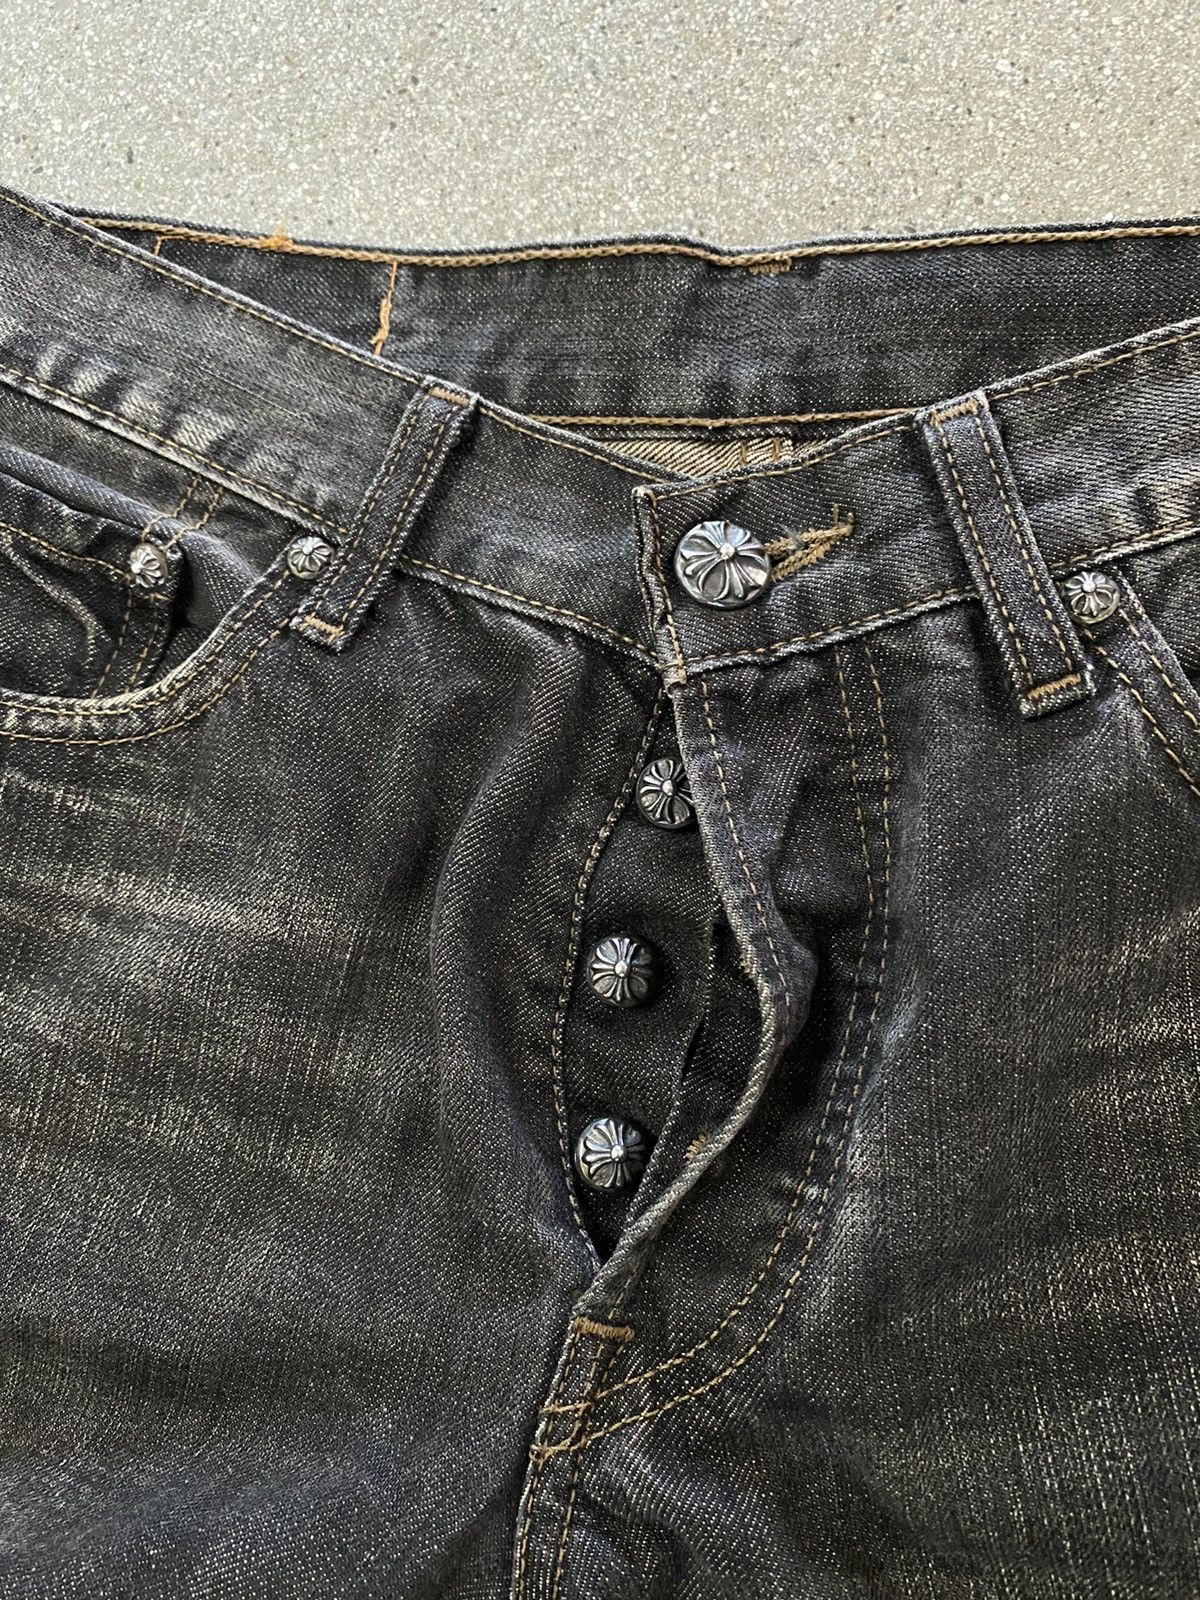 Chrome Hearts Cross Patch Denim Jeans (Special Order) Size US 30 / EU 46 - 7 Thumbnail